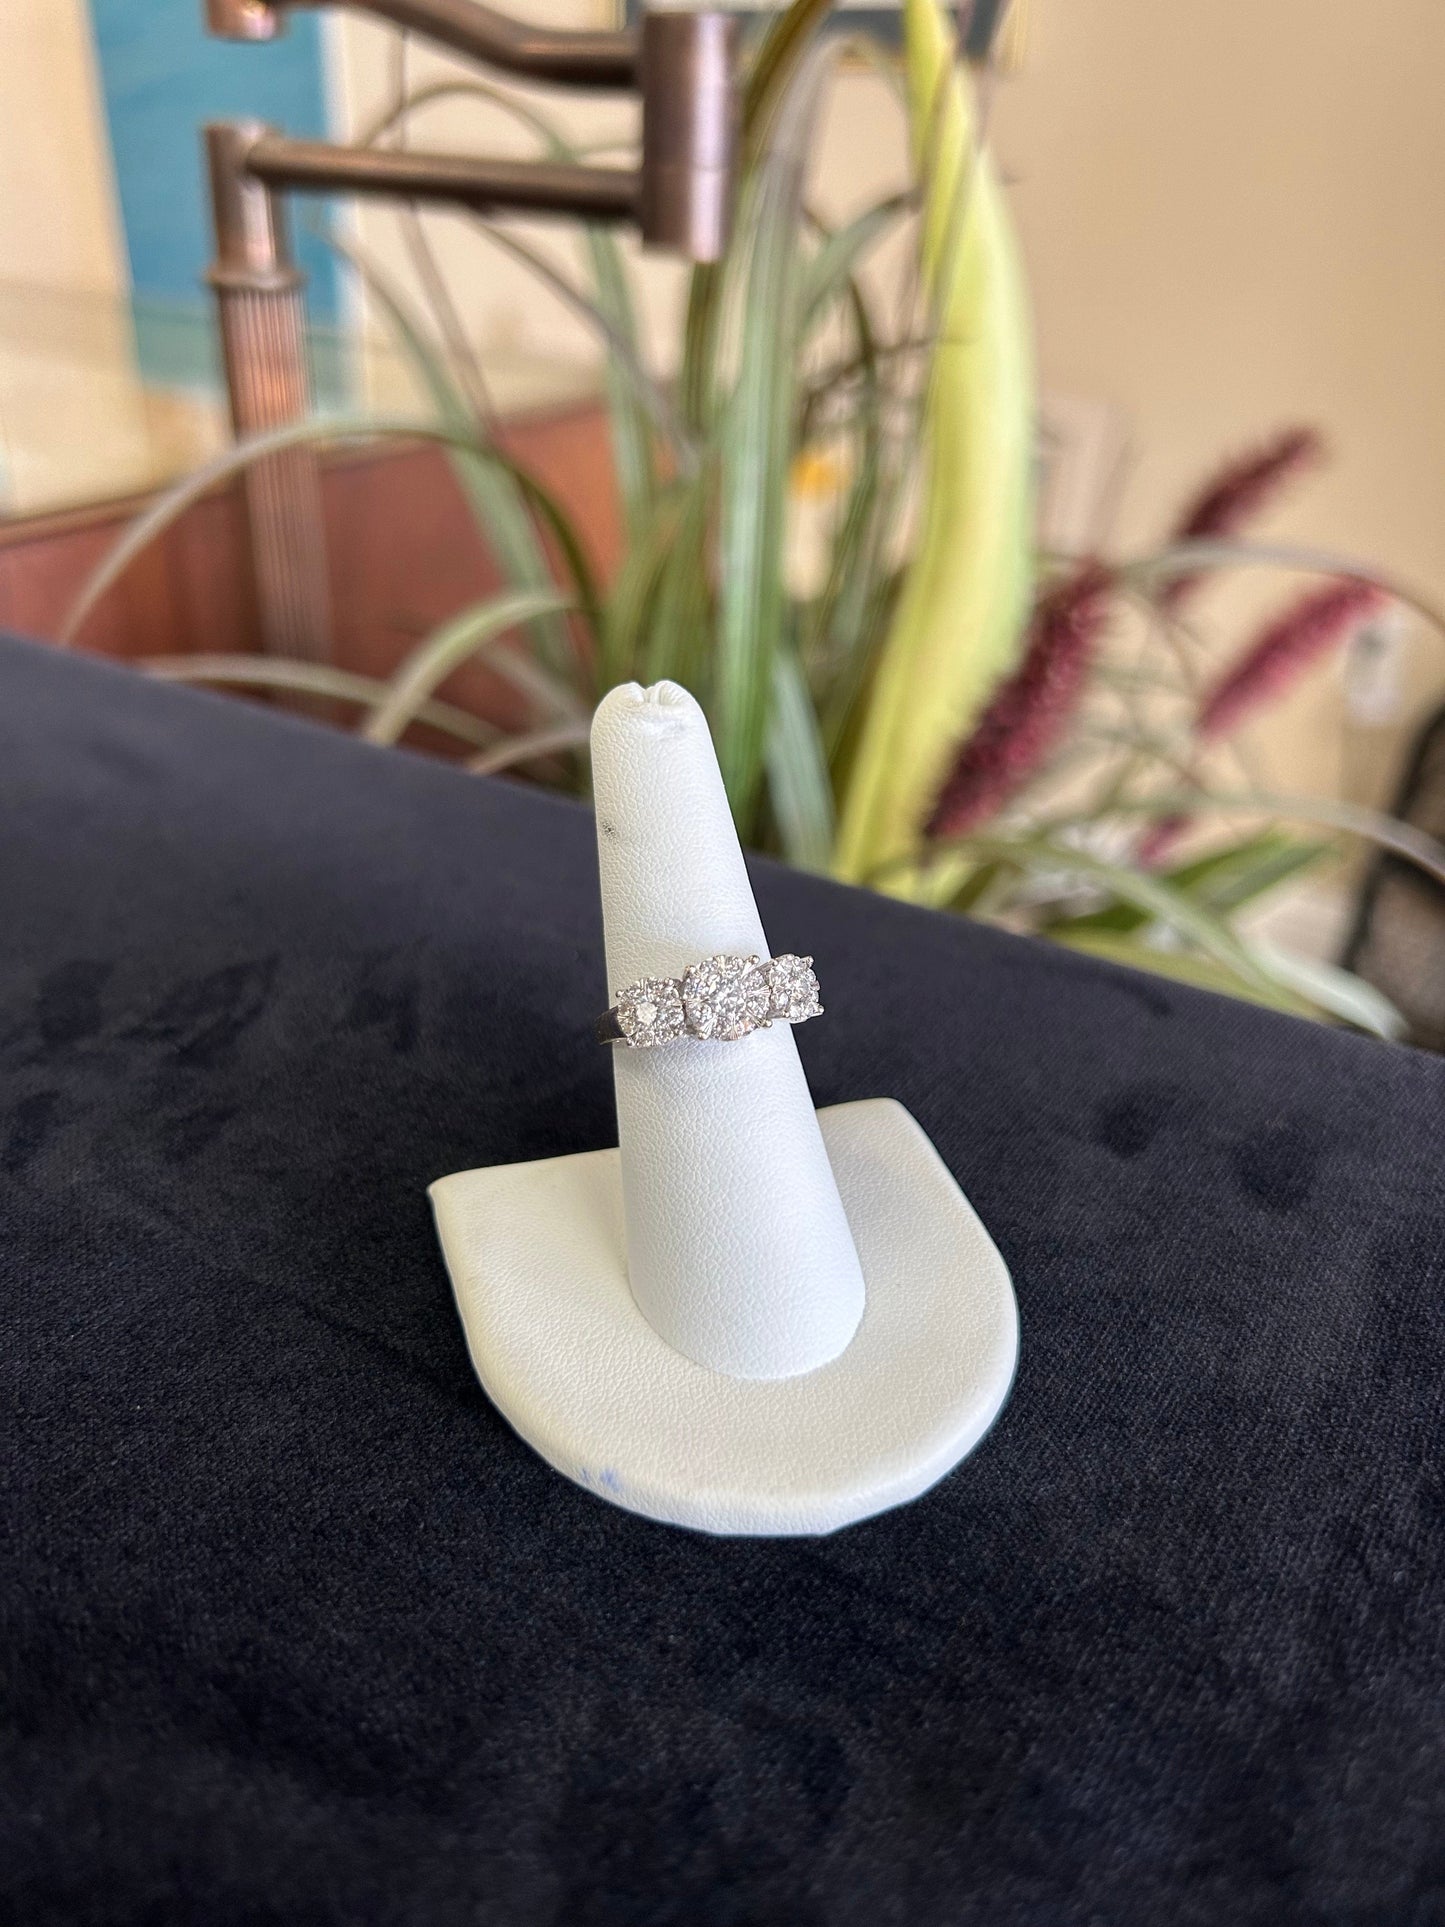 White Gold Three Stone Diamond Ring with Diamond Halo